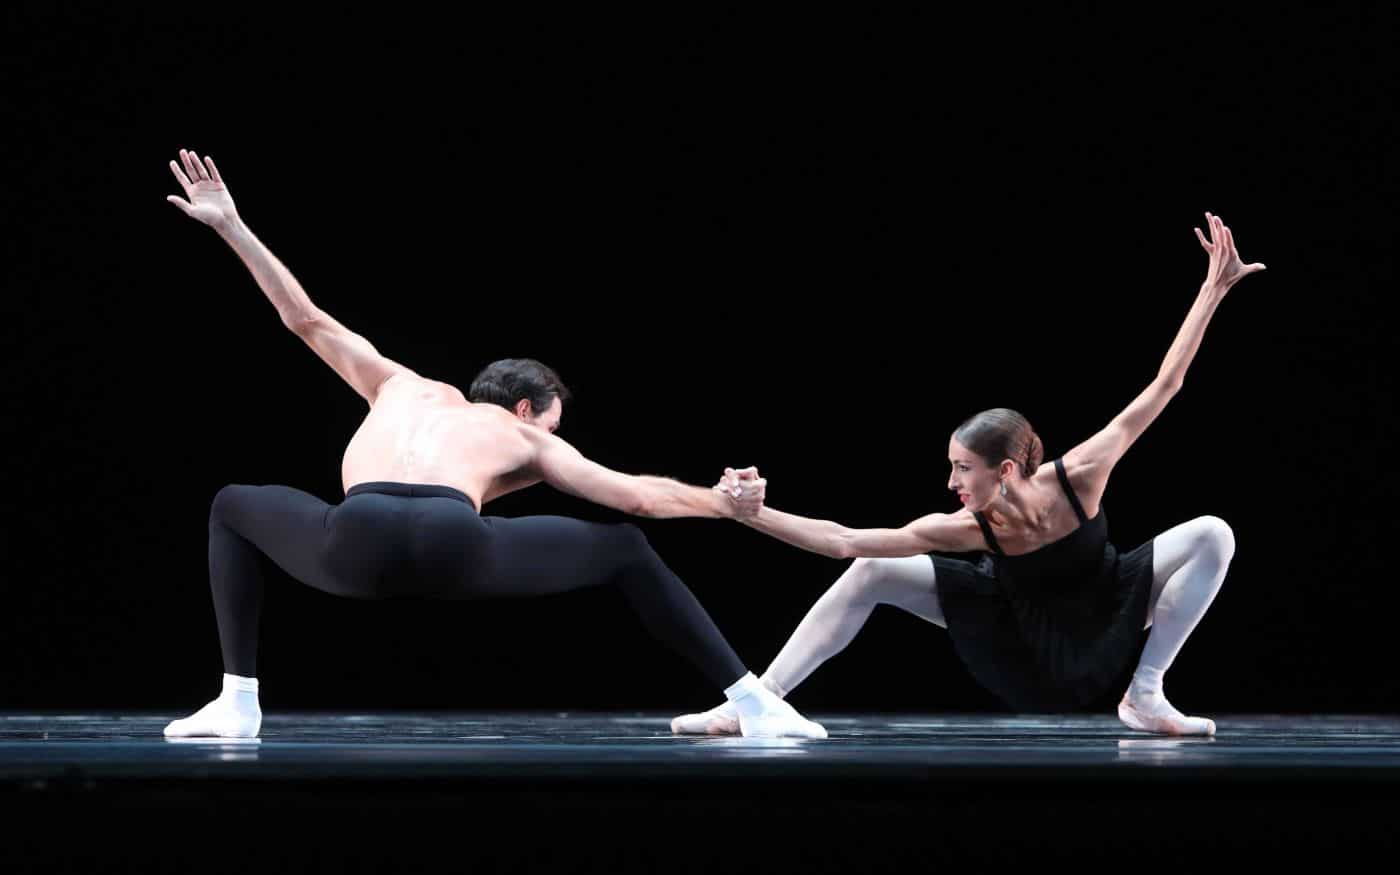 Why I get nostalgic seeing Variations by Hans van Manen at the Dutch National Ballet